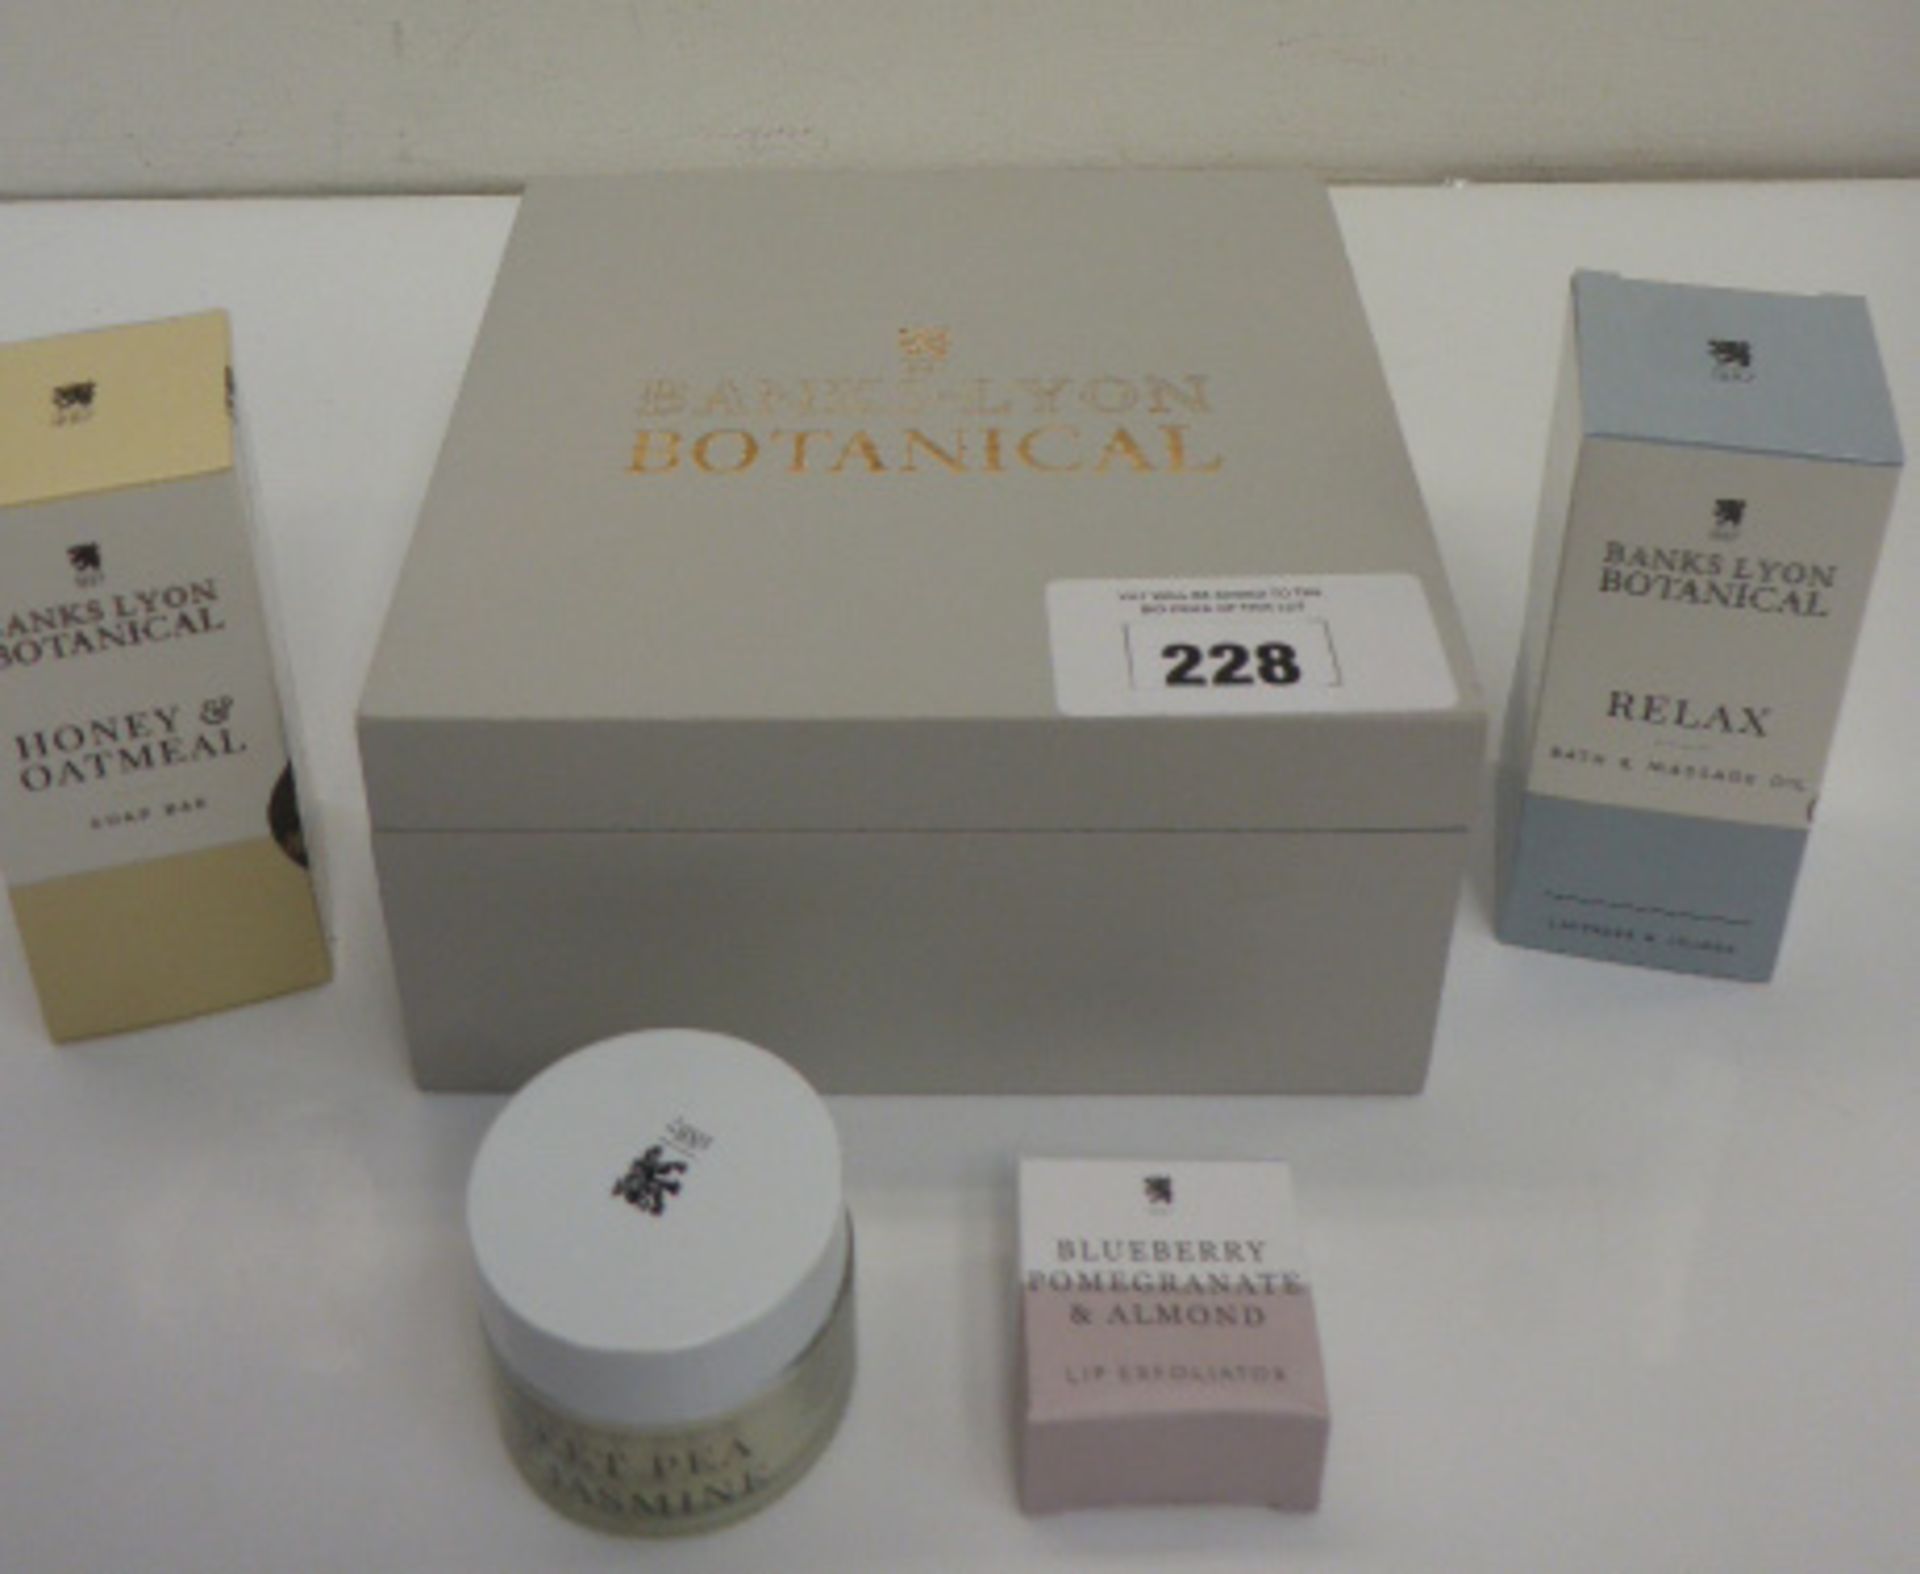 Banks-Lyon Botanical gift box set comprising soap bar, bath & massage oil, lip exfoliator and candle